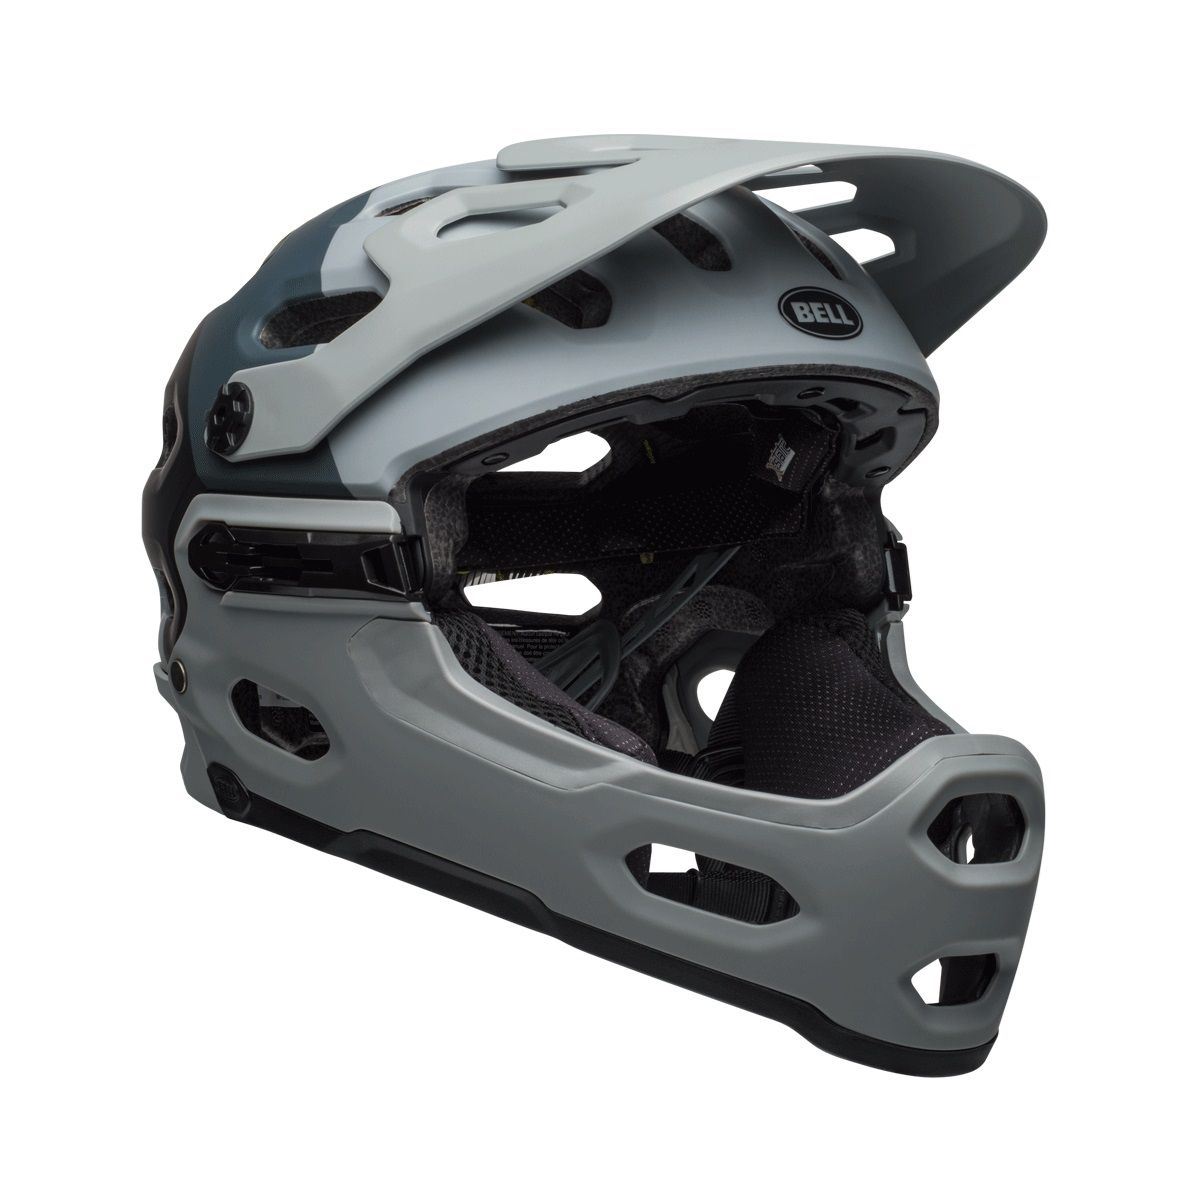 Bell Track Bicycle Helmet Adult Adjustable Grey